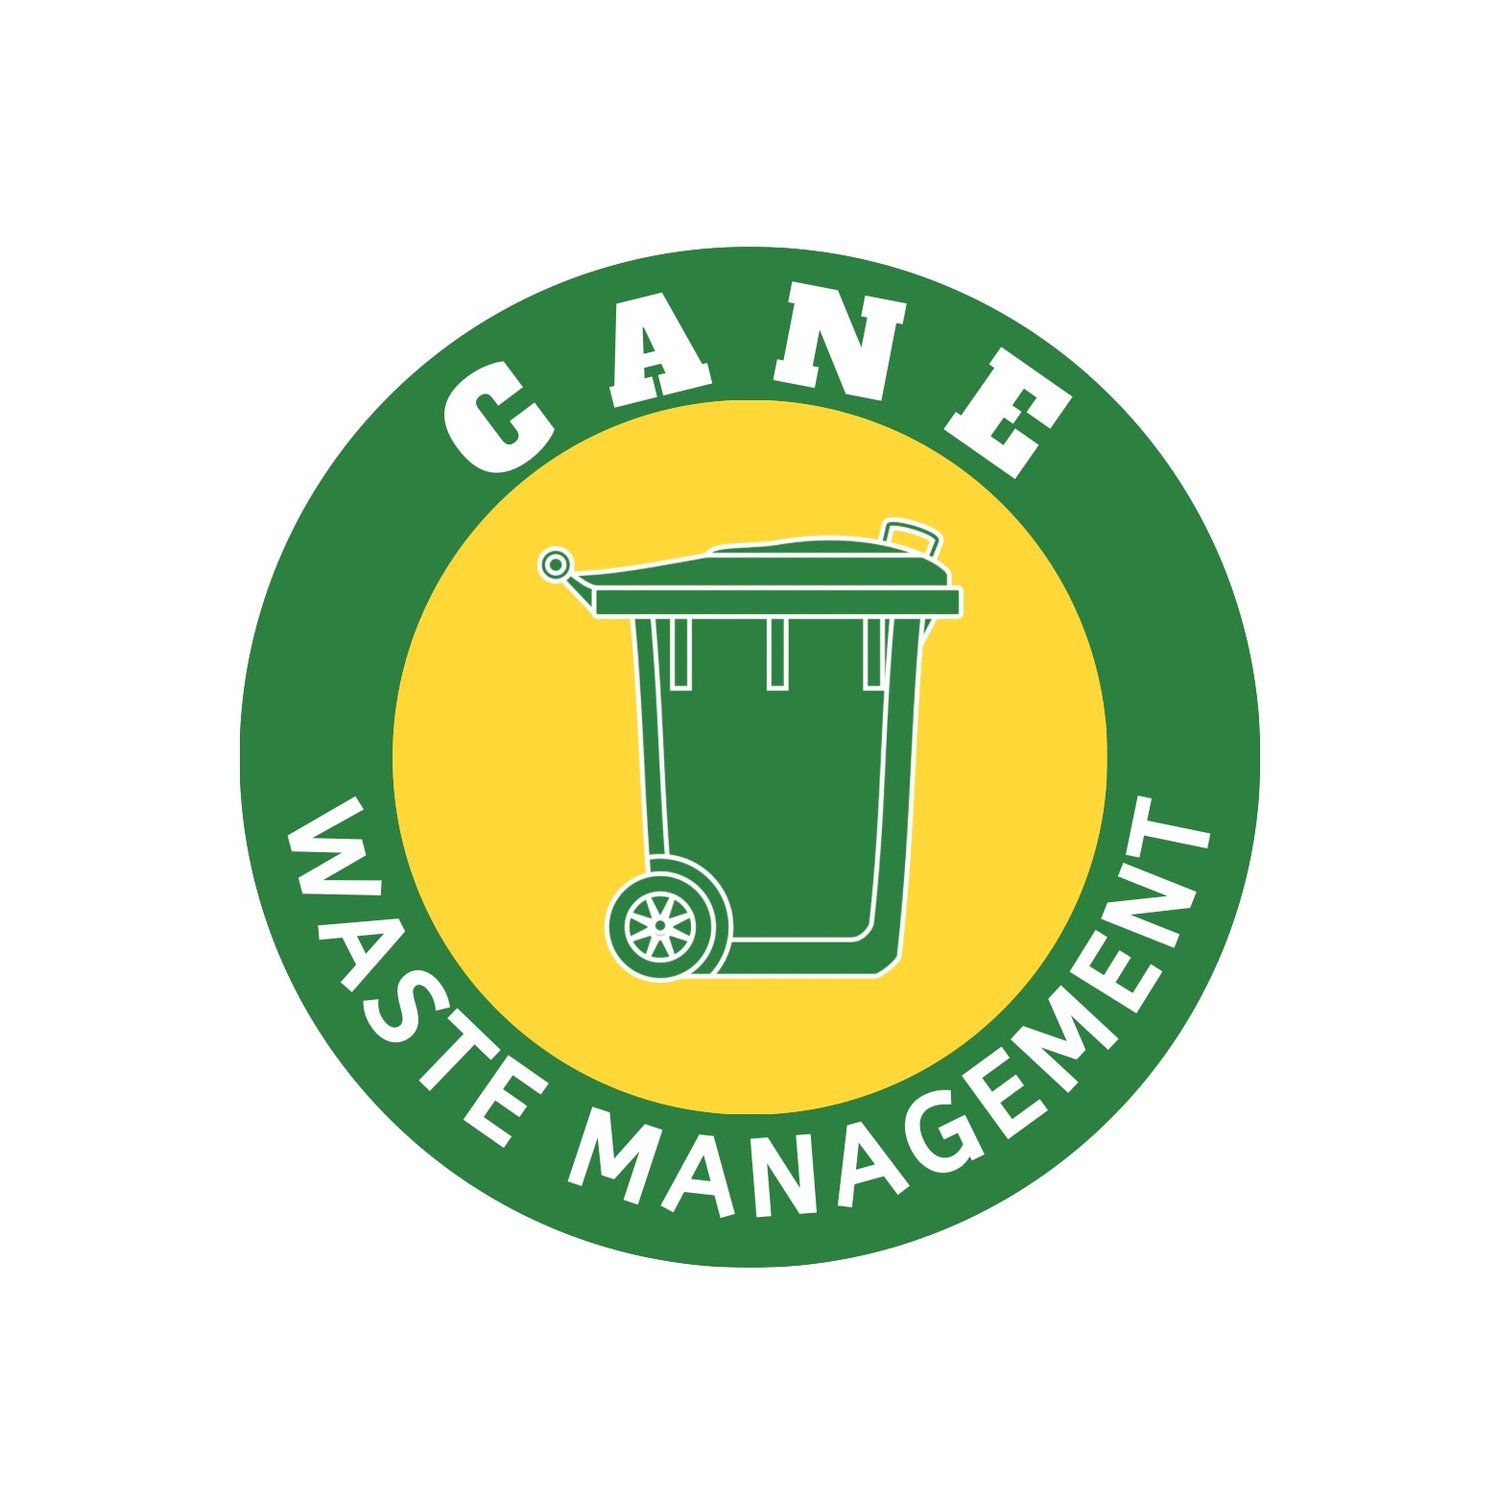 CANE Waste Management